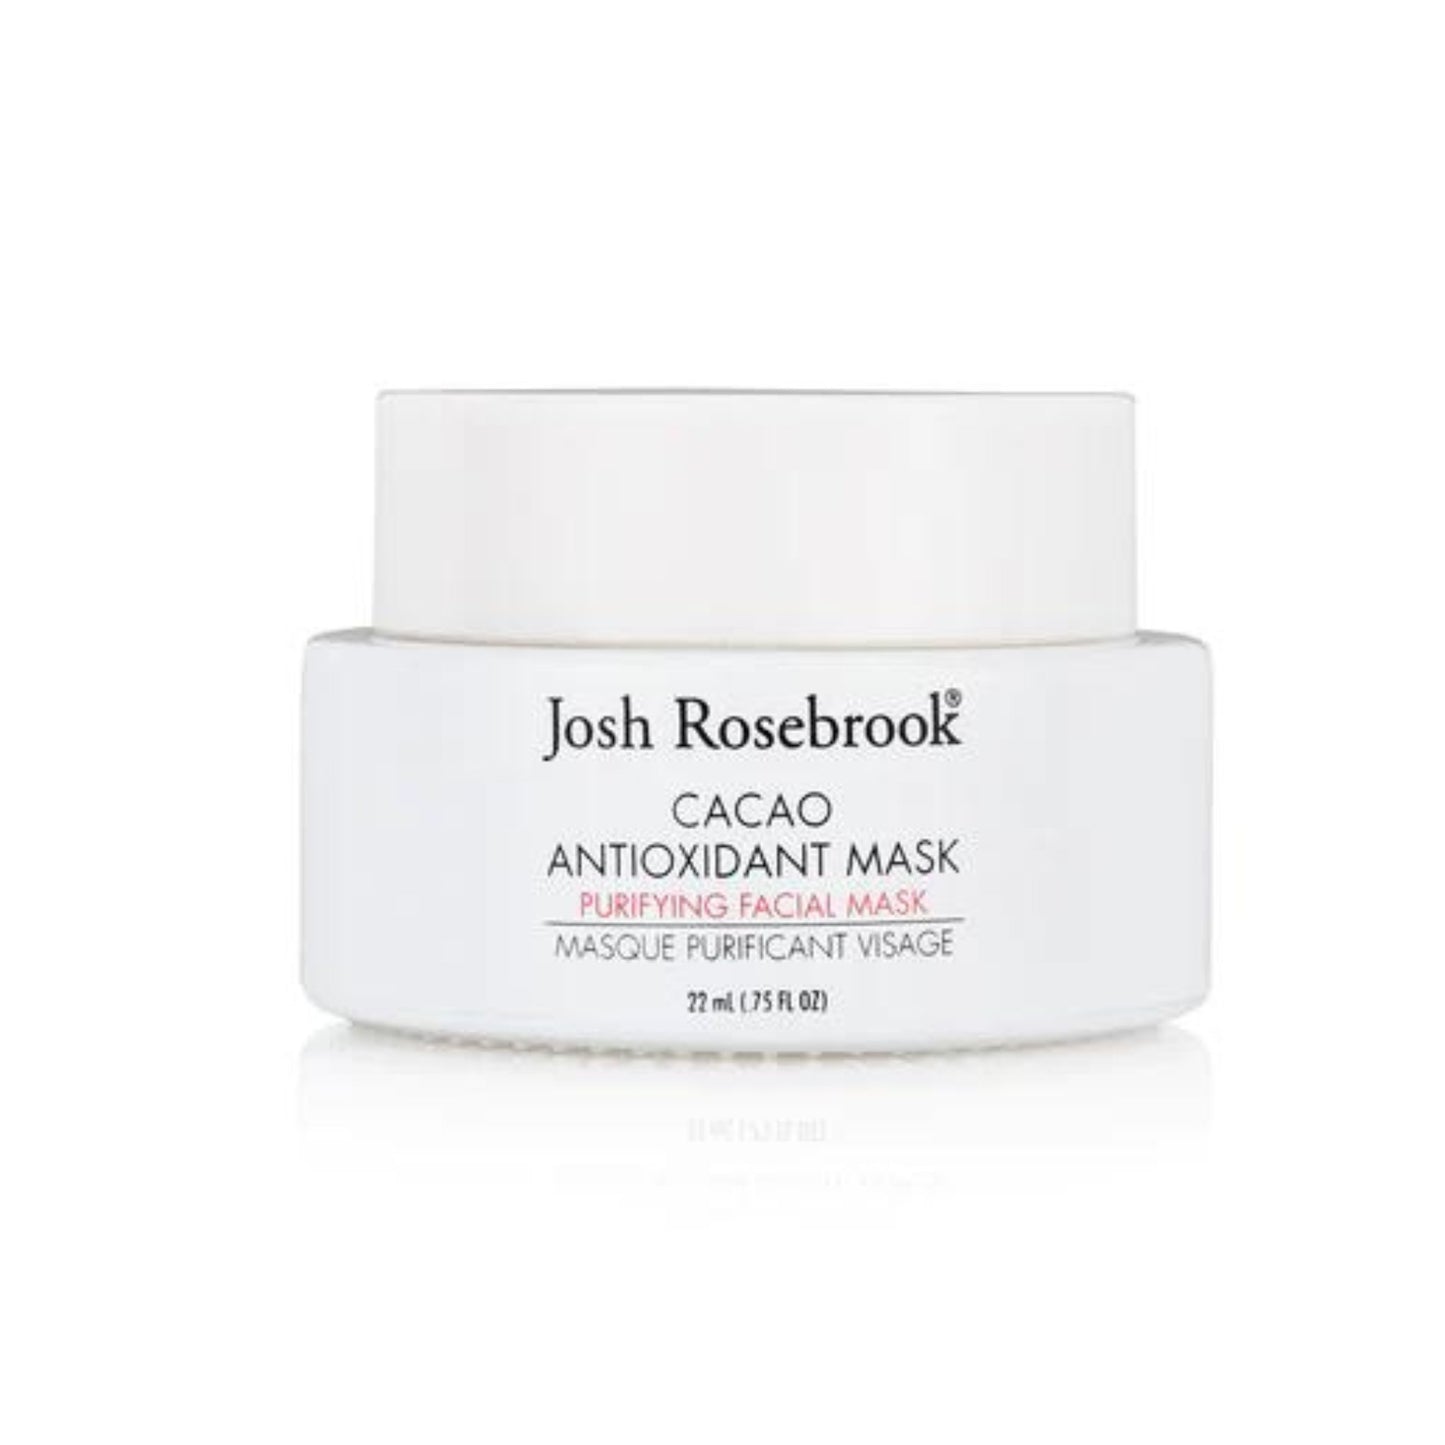 Josh Rosebrook - Josh Rosebrook Cacao Antioxidant Mask - ORESTA clean beauty simplified